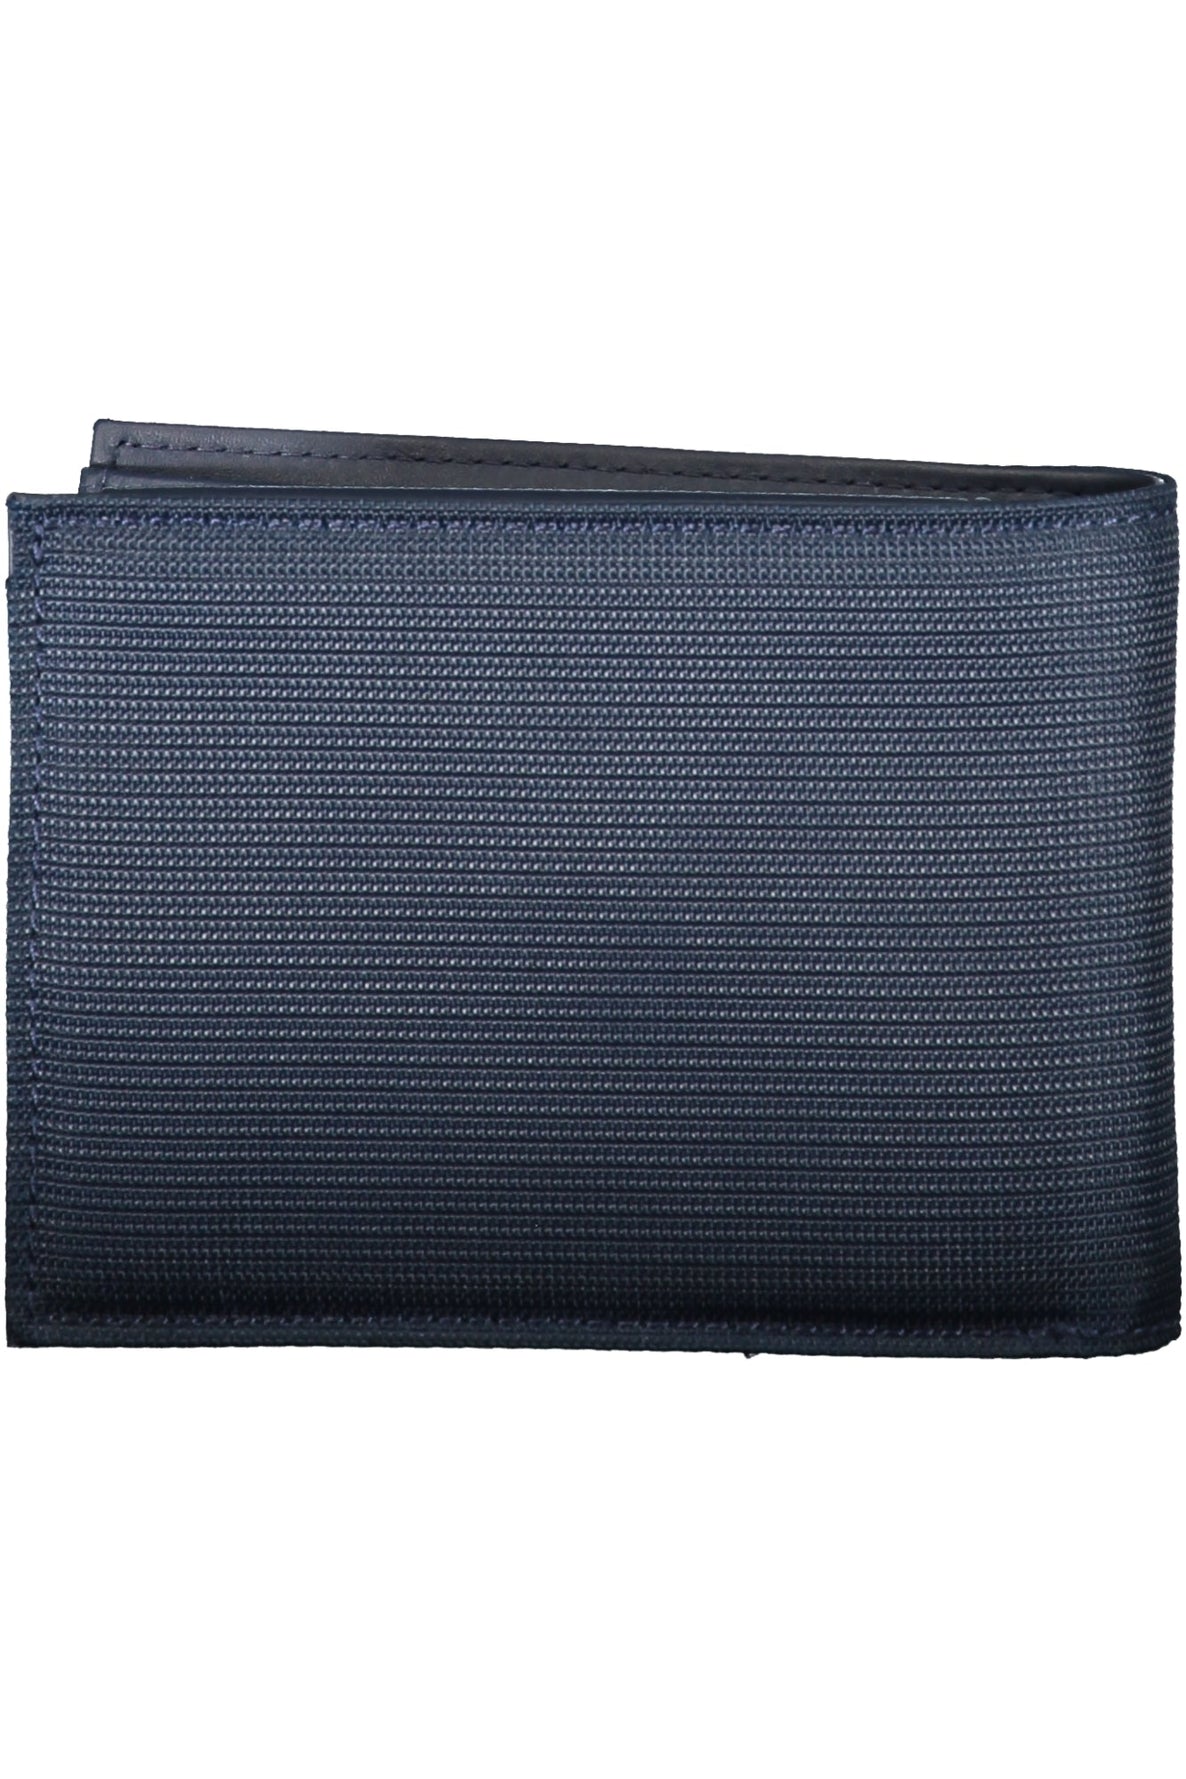 Men's wallet blue